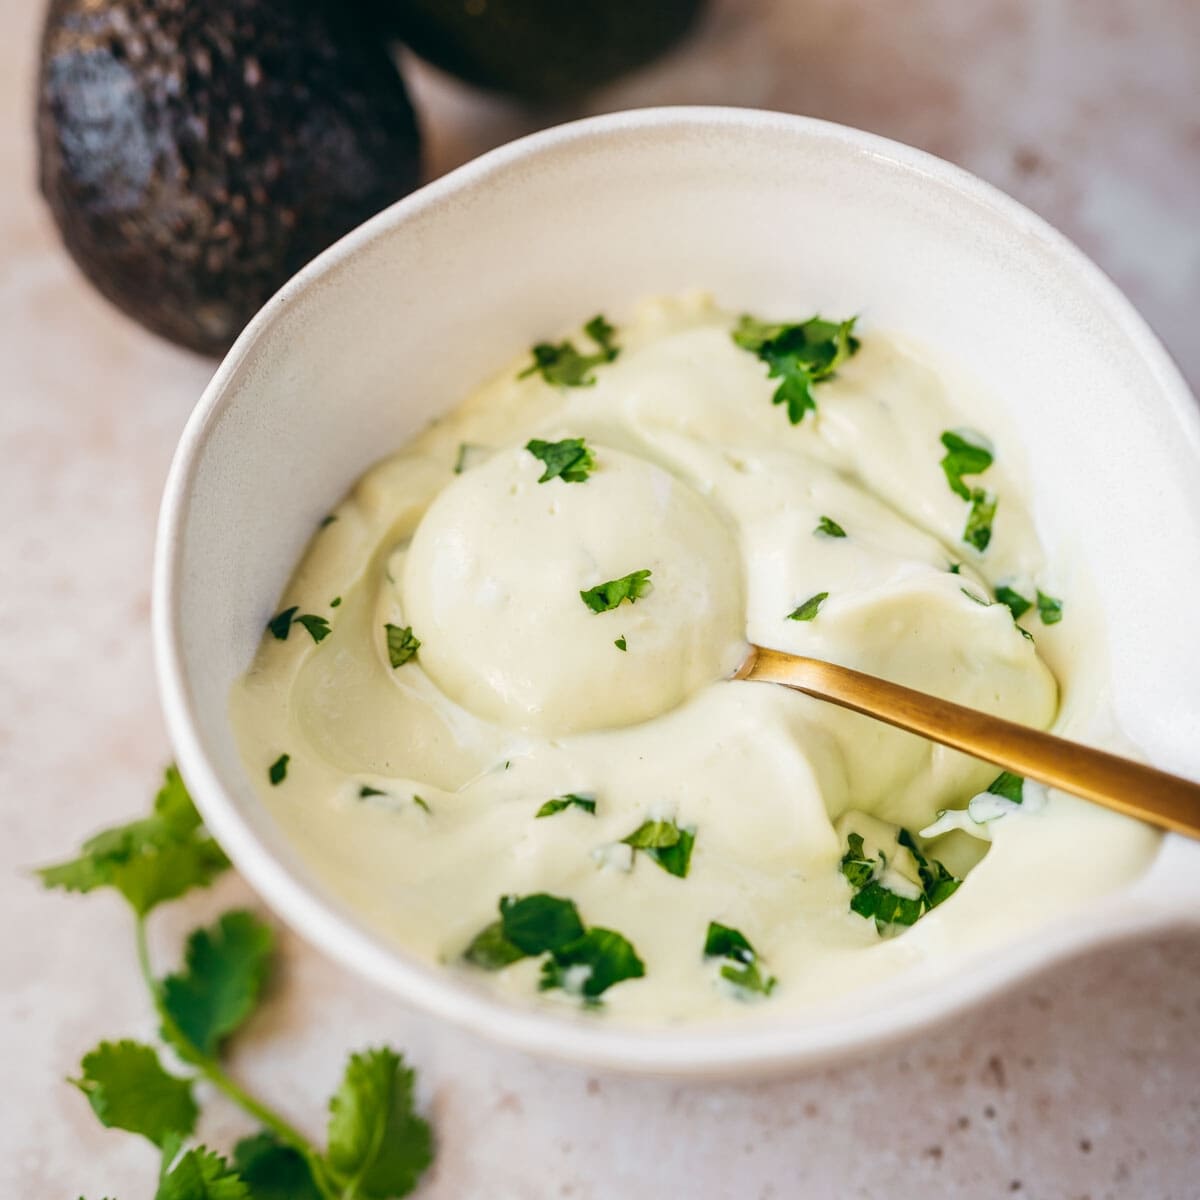 A white bowl filled with a creamy light green avocado crema sauce.